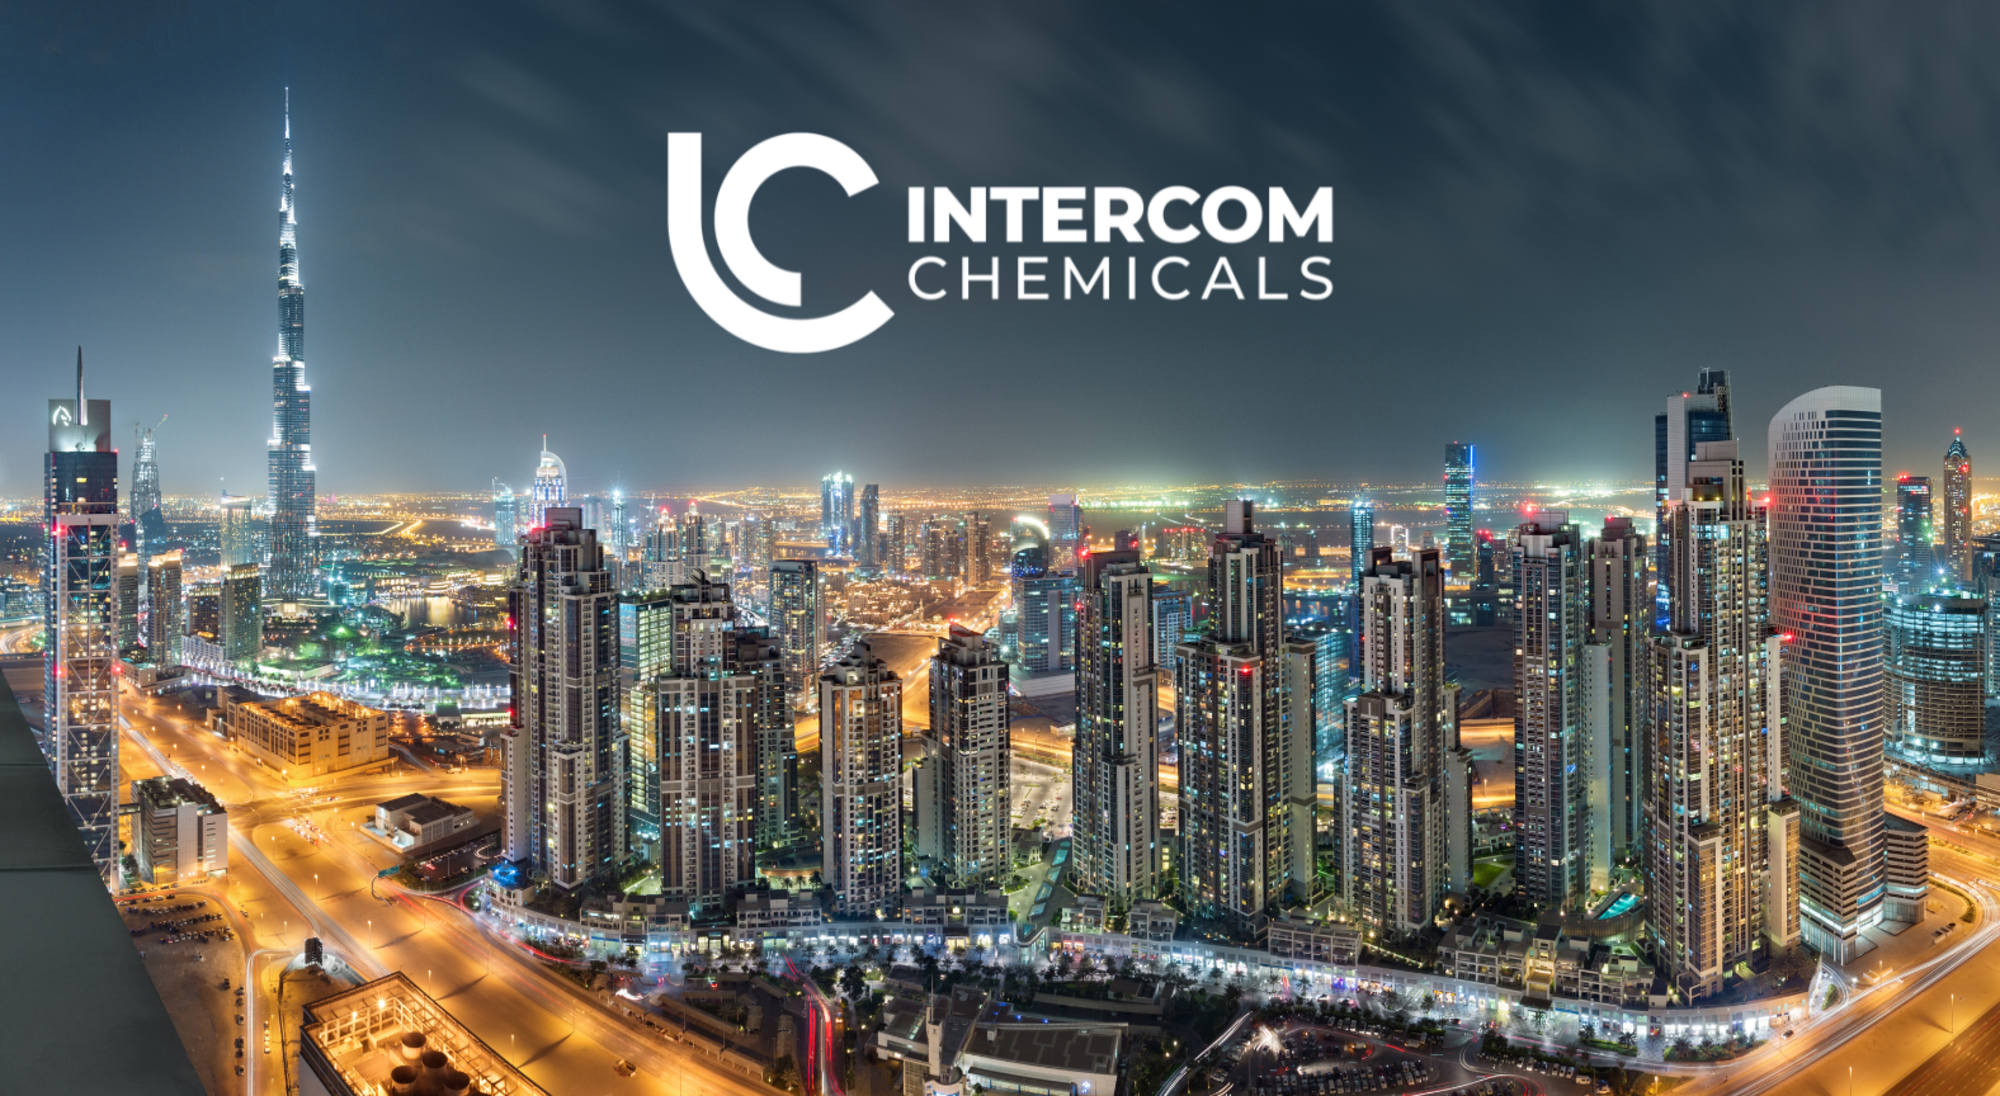 Intercom chemicals opens a sales office in Dubai